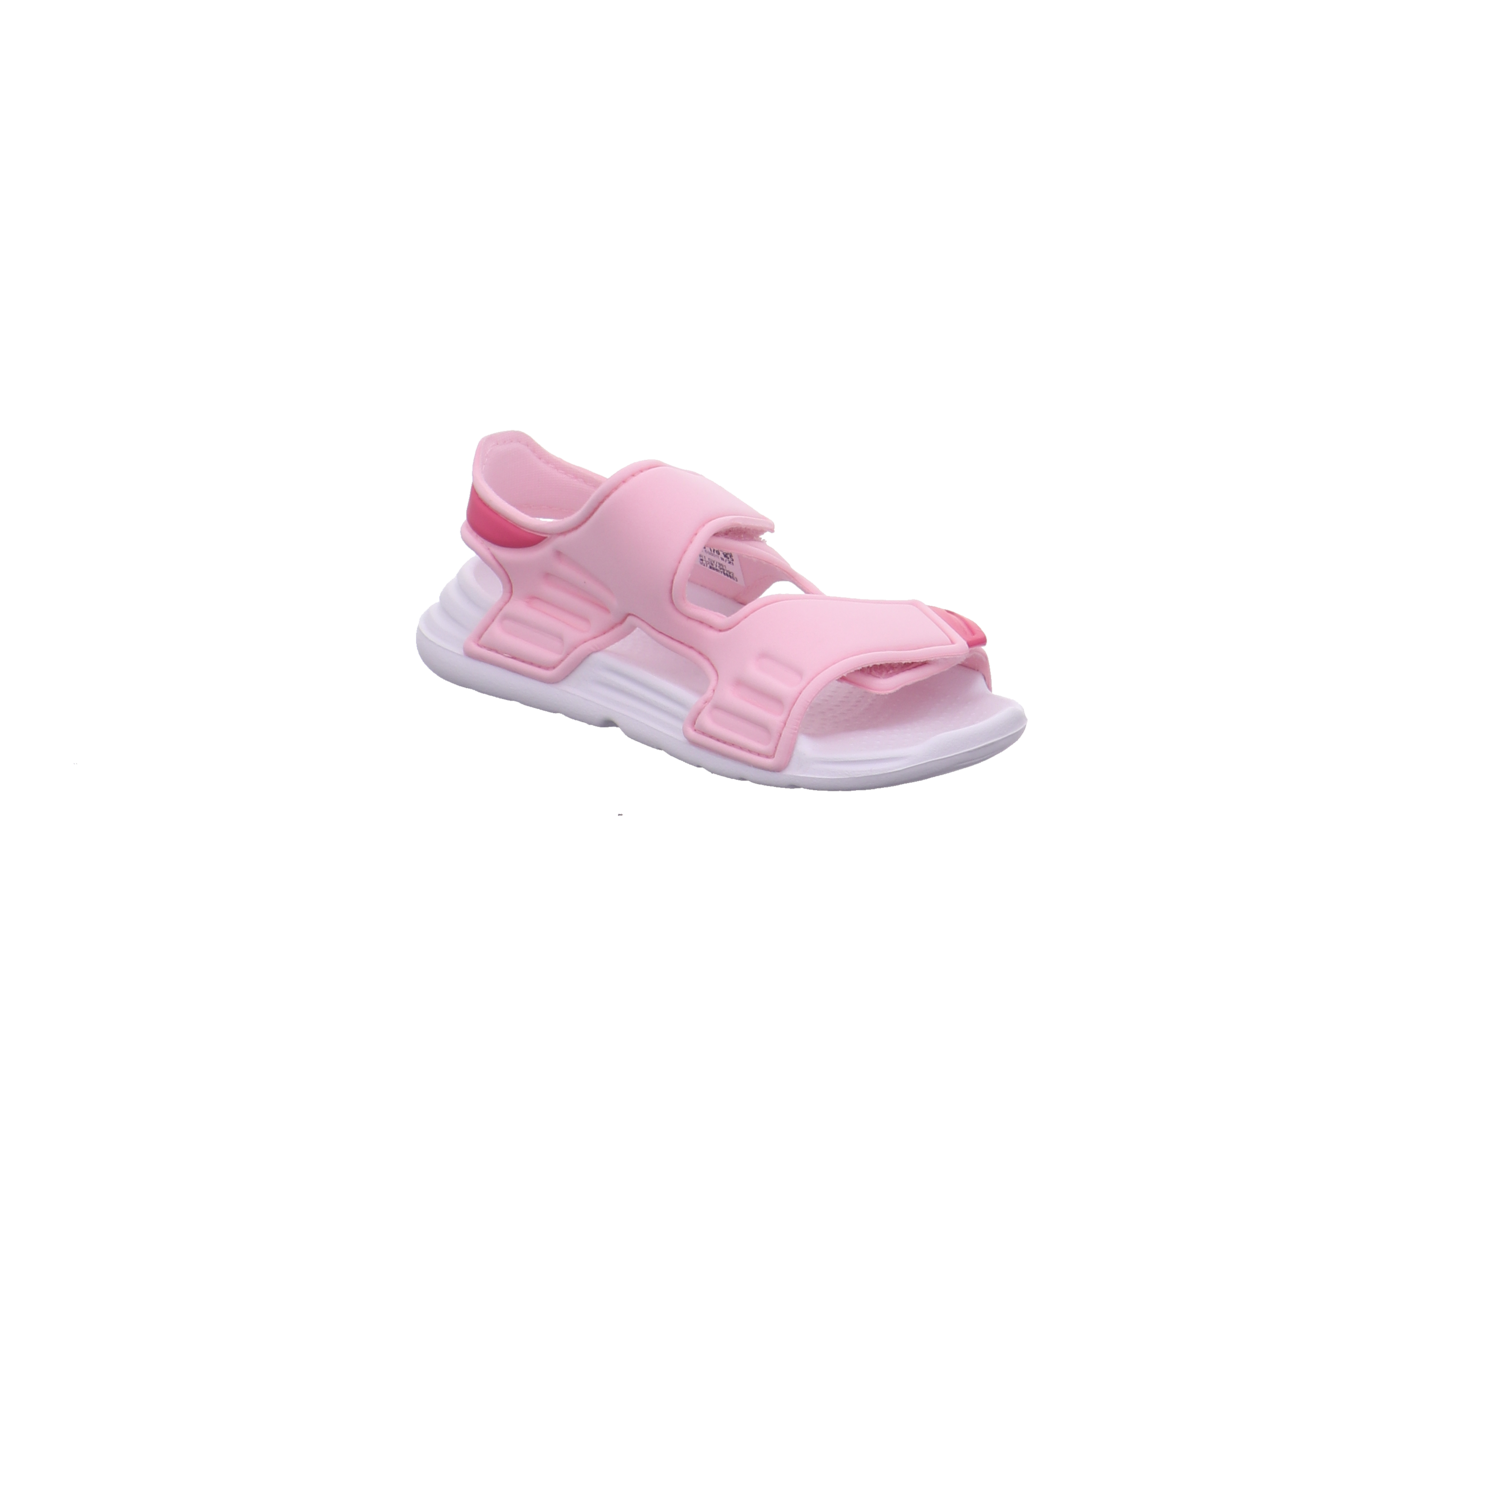 Adidas Offene Schuhe rose Bild7